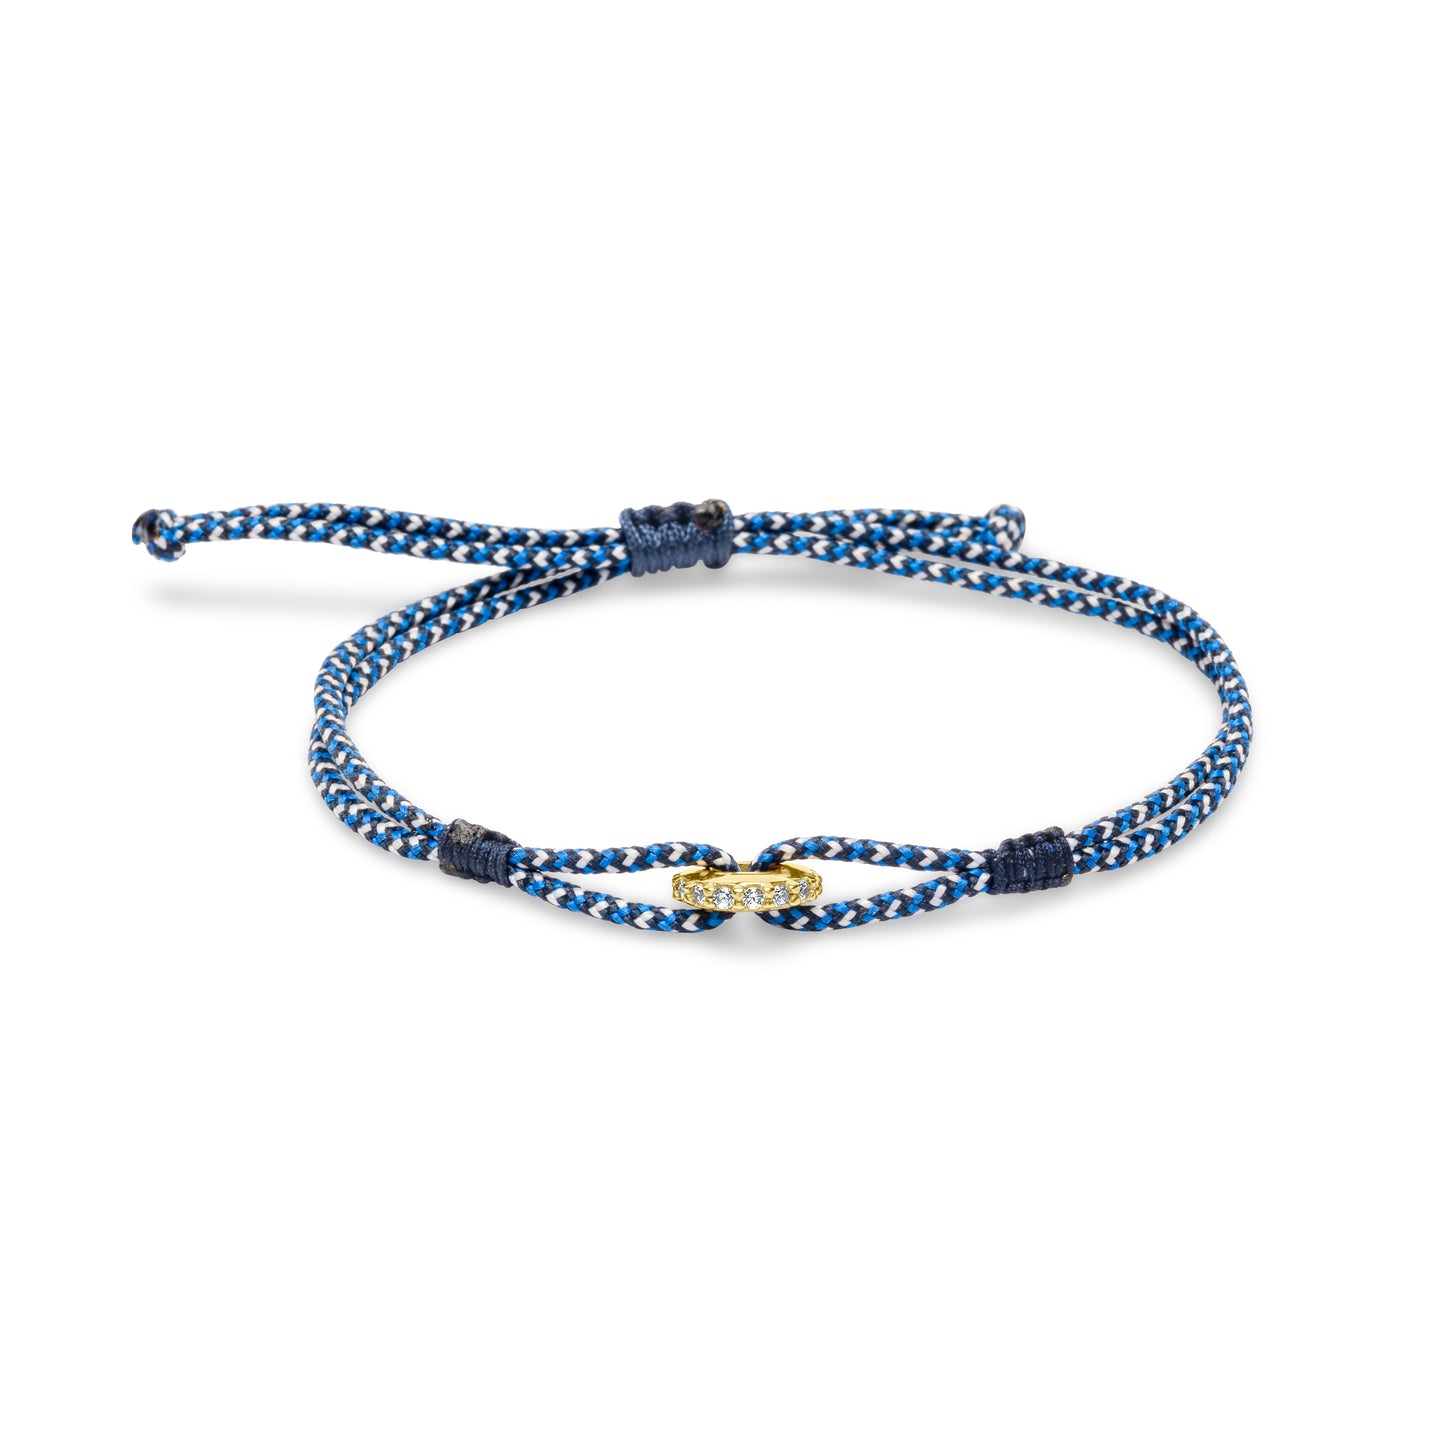 Friendship bracelet - Navy